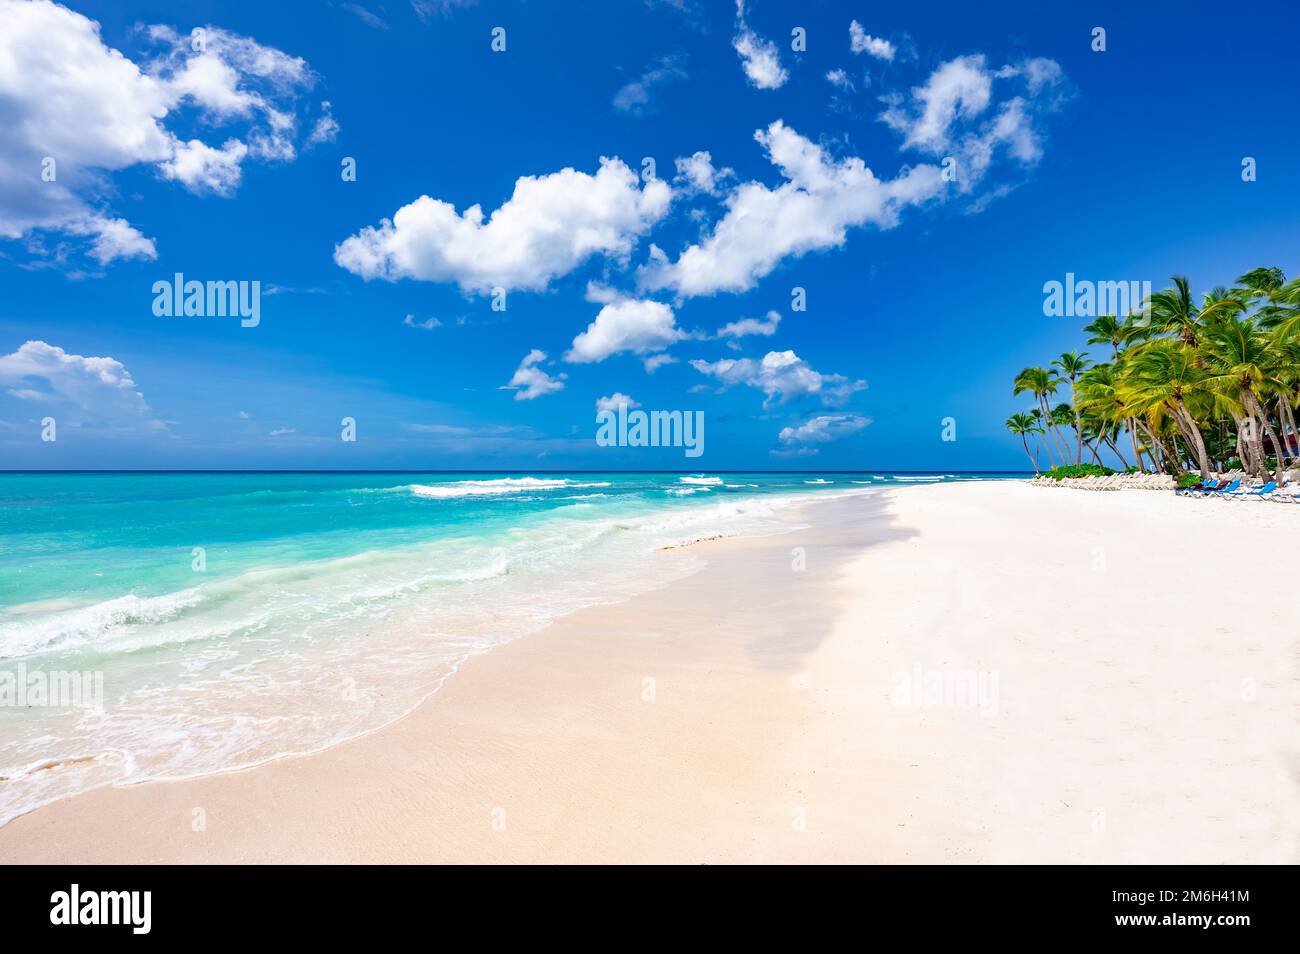 Magical paradise beach of the Caribbean sea Stock Photo